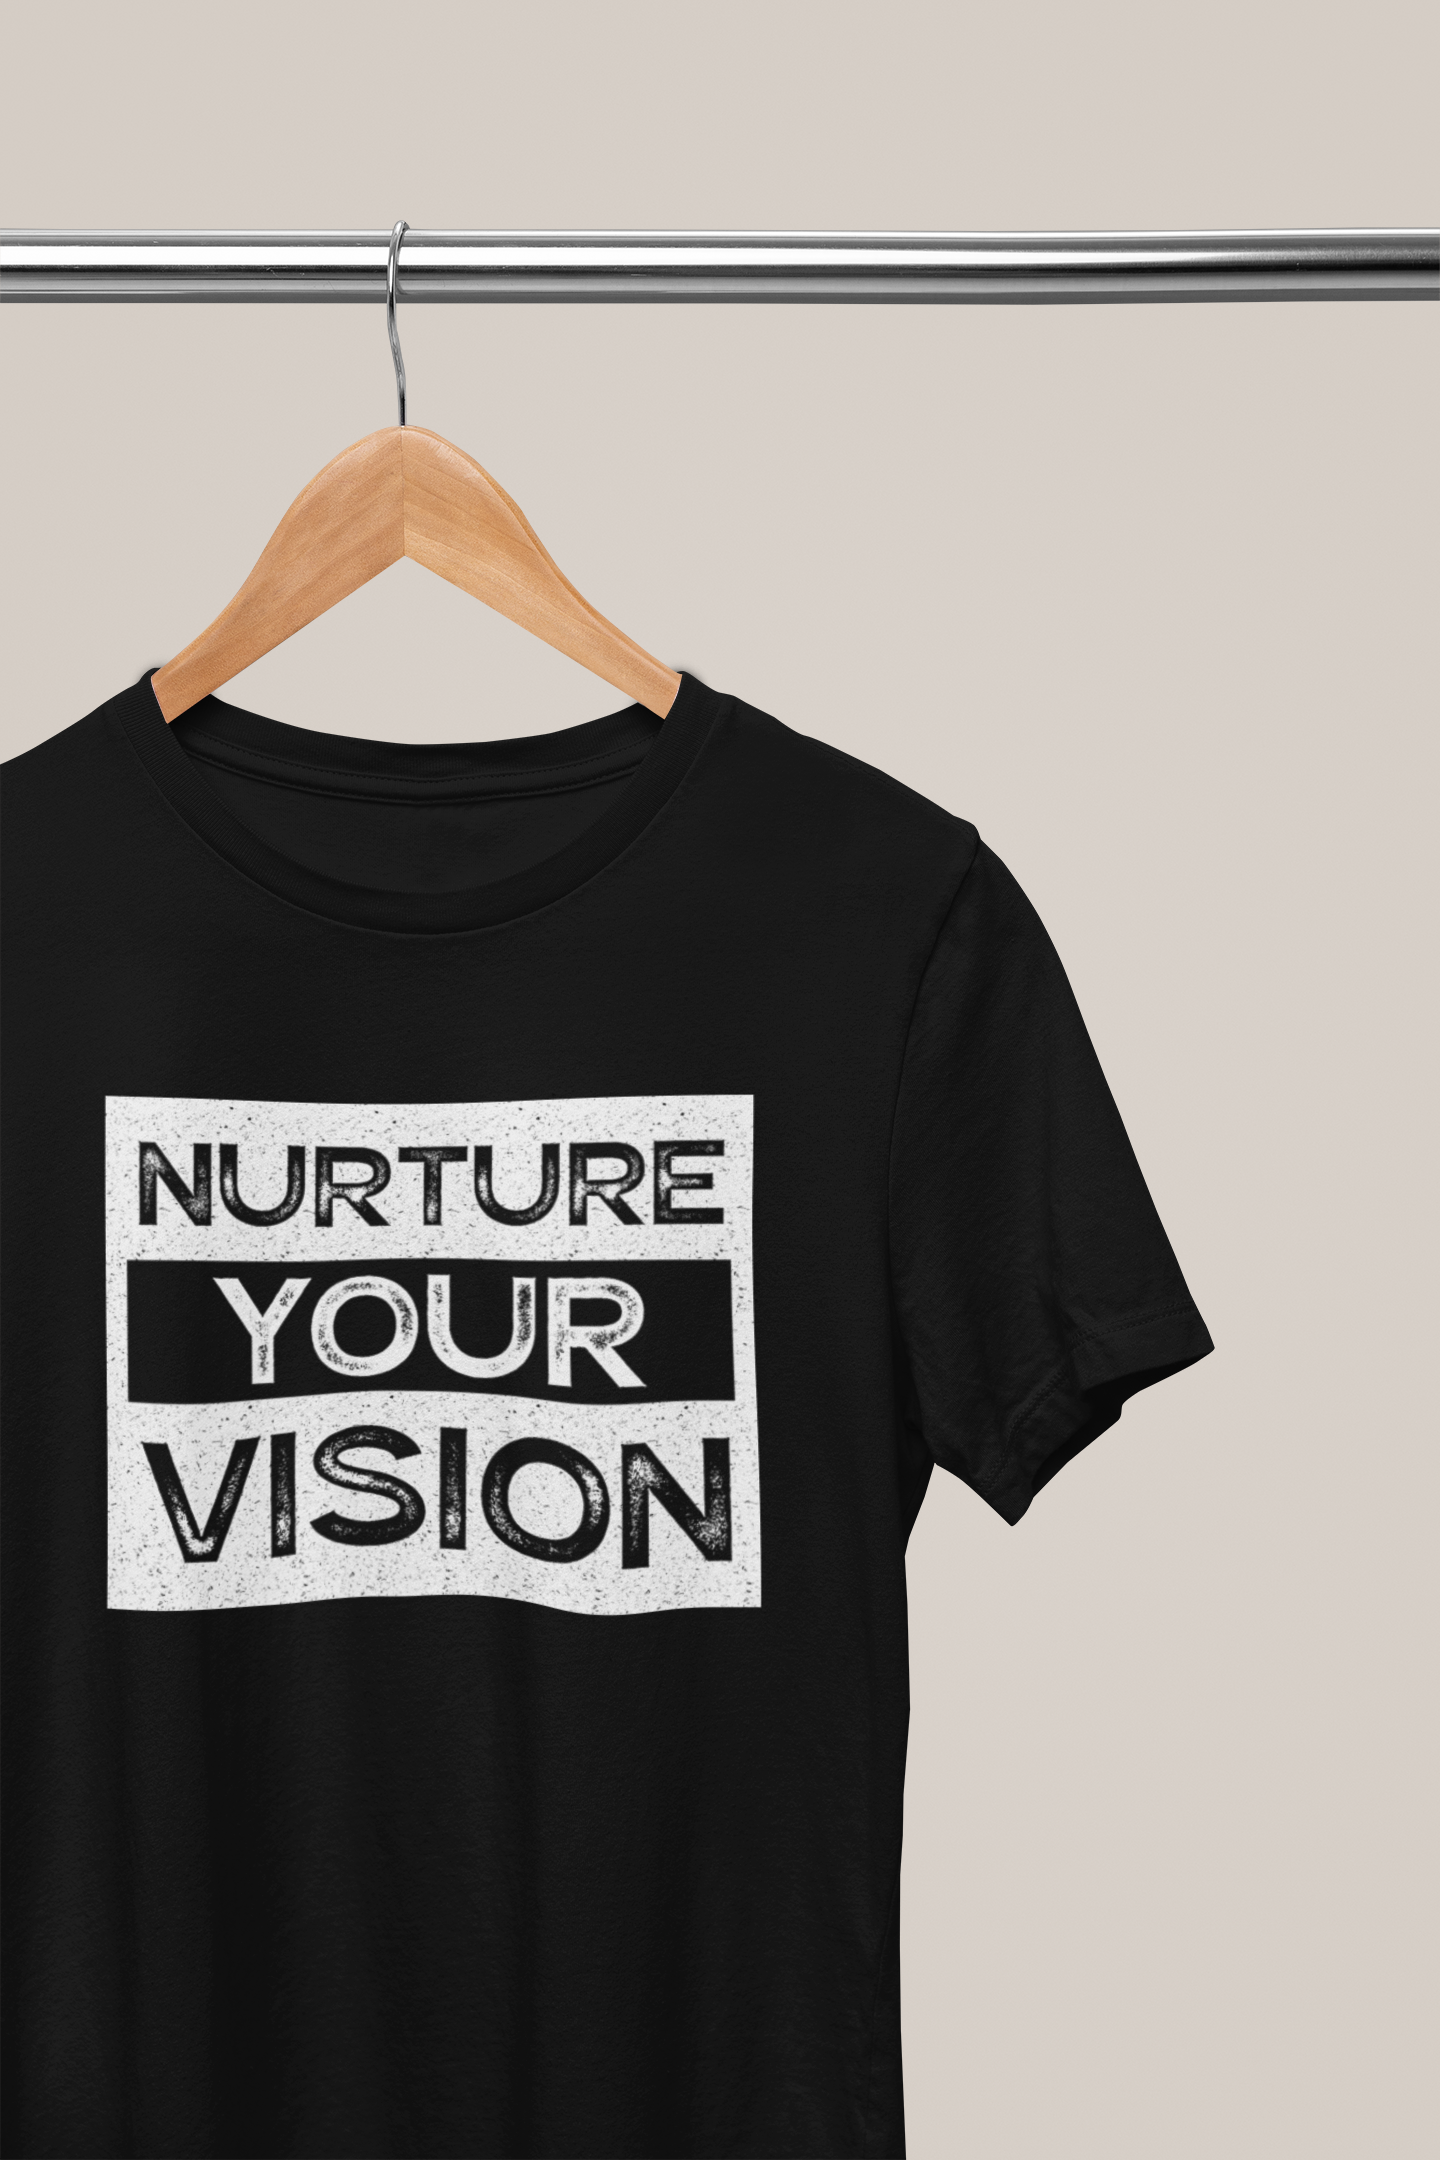 Nurture Your Vision, Hoodies, Sweatshirts, Tees, and Mugs